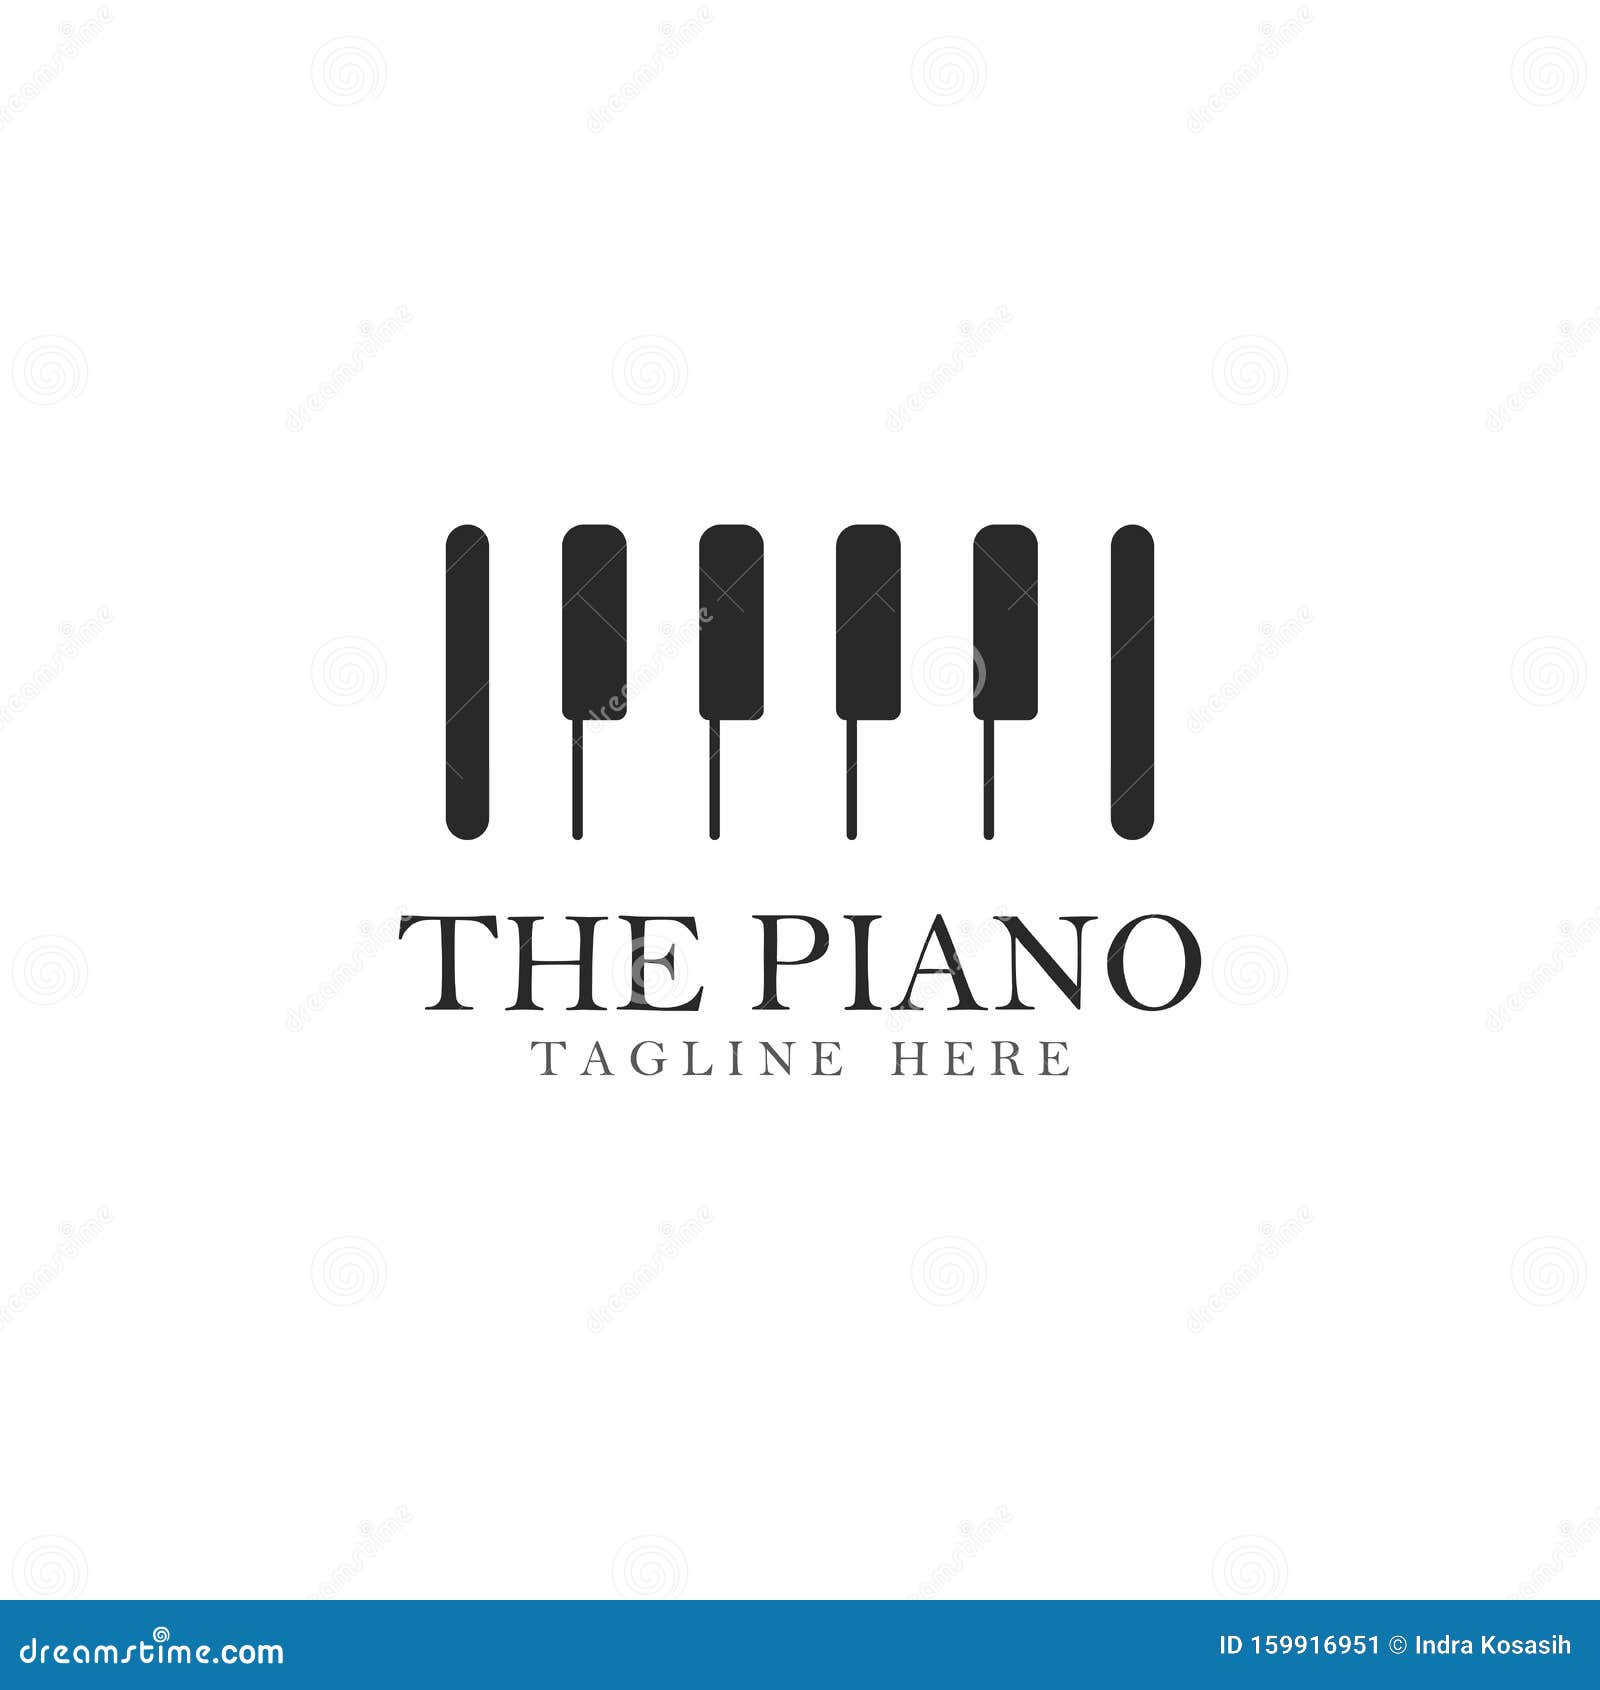 Piano Broadens Global Footprint and Social Media Publishing Capabilities